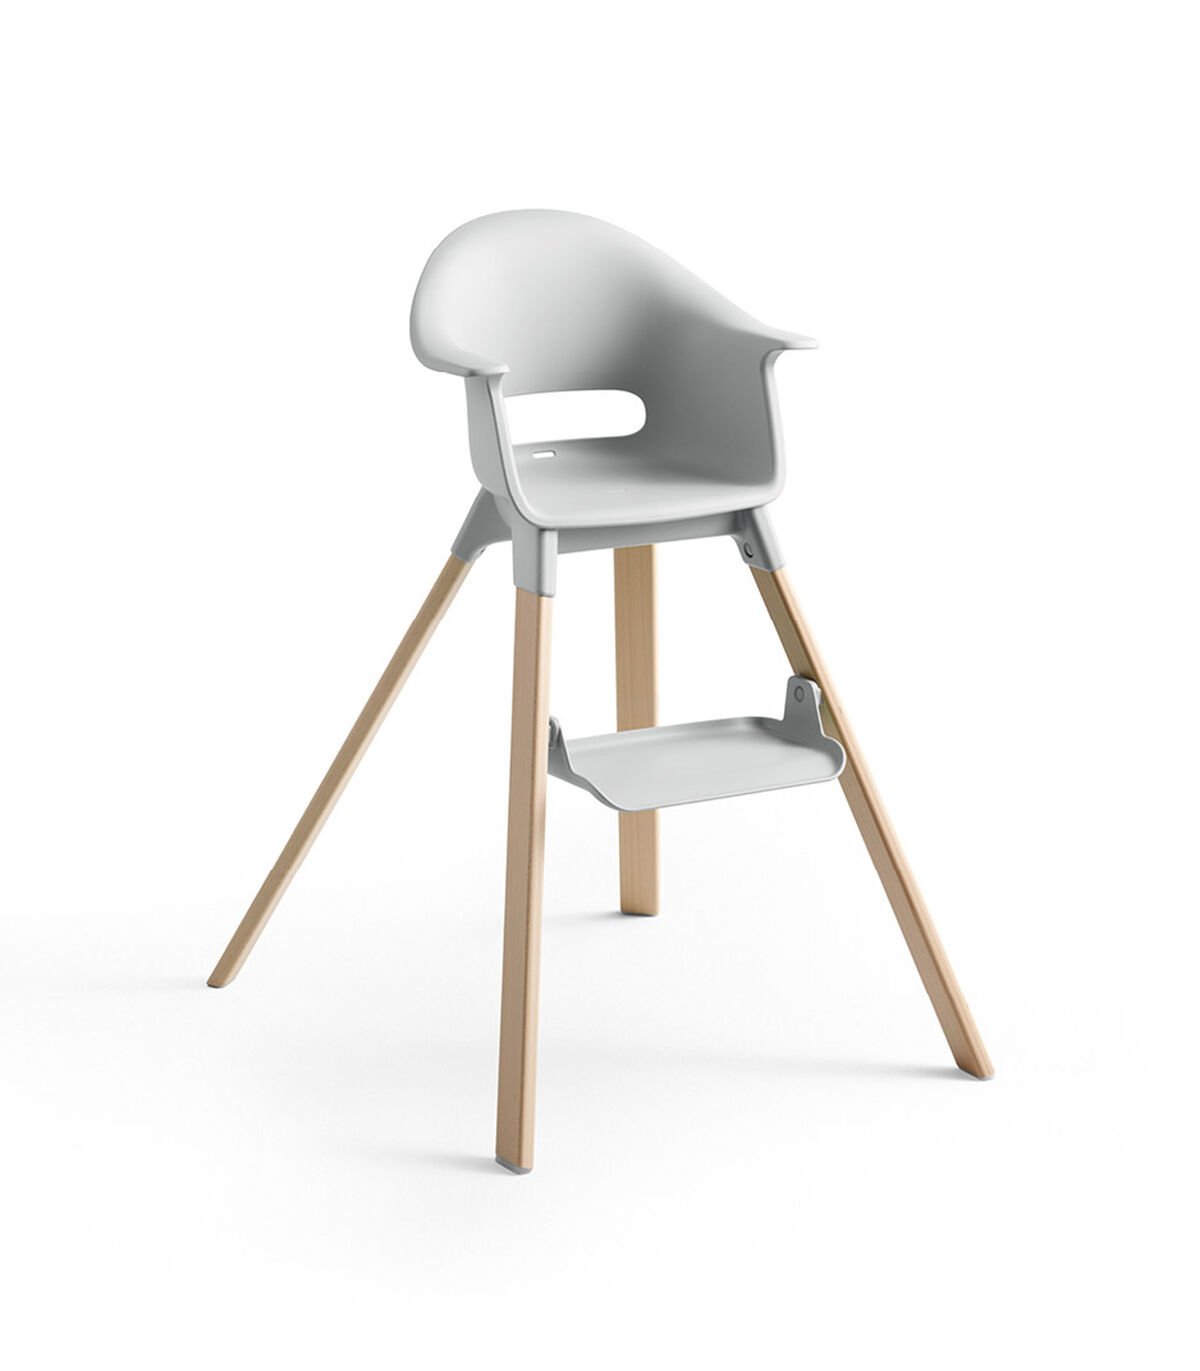 Stokke Clikk High Chair with Travel Bag, White - ANB Baby -7040356392001$100 - $300